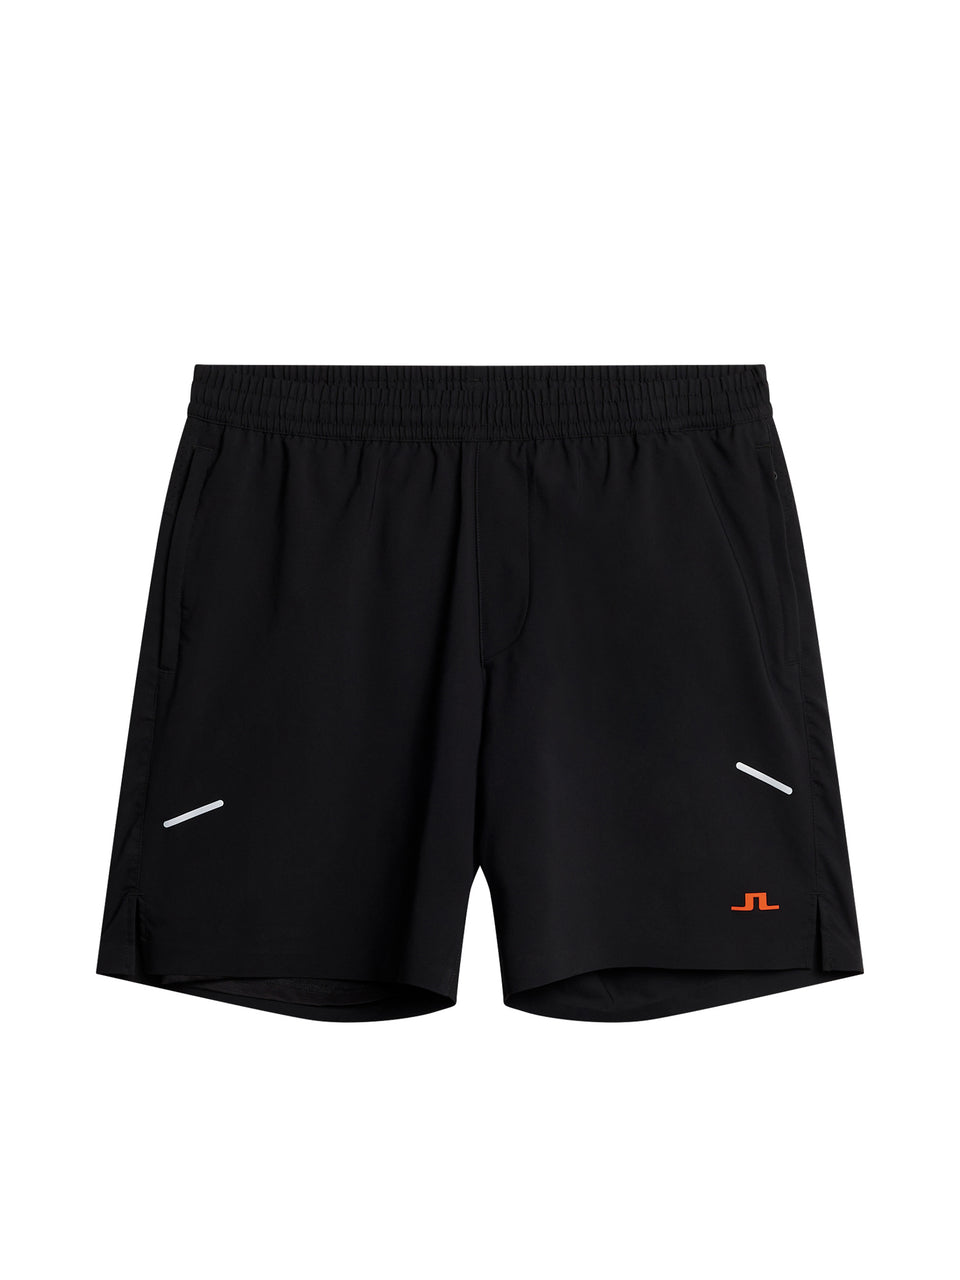 Novo Pro Pack Shorts / Black